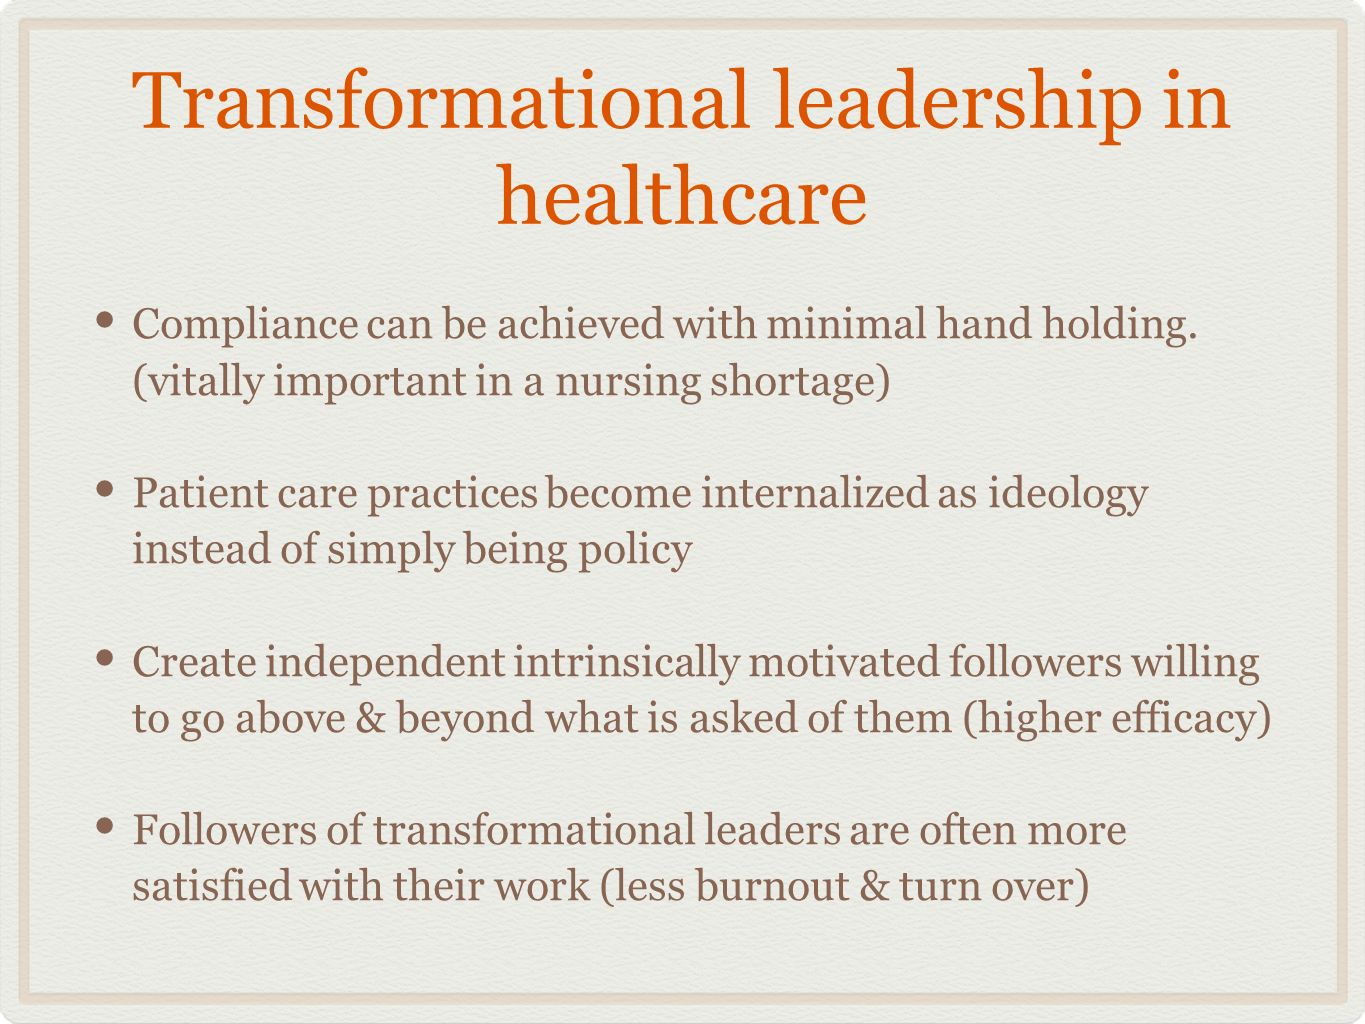 transformational leadership in healthcare today